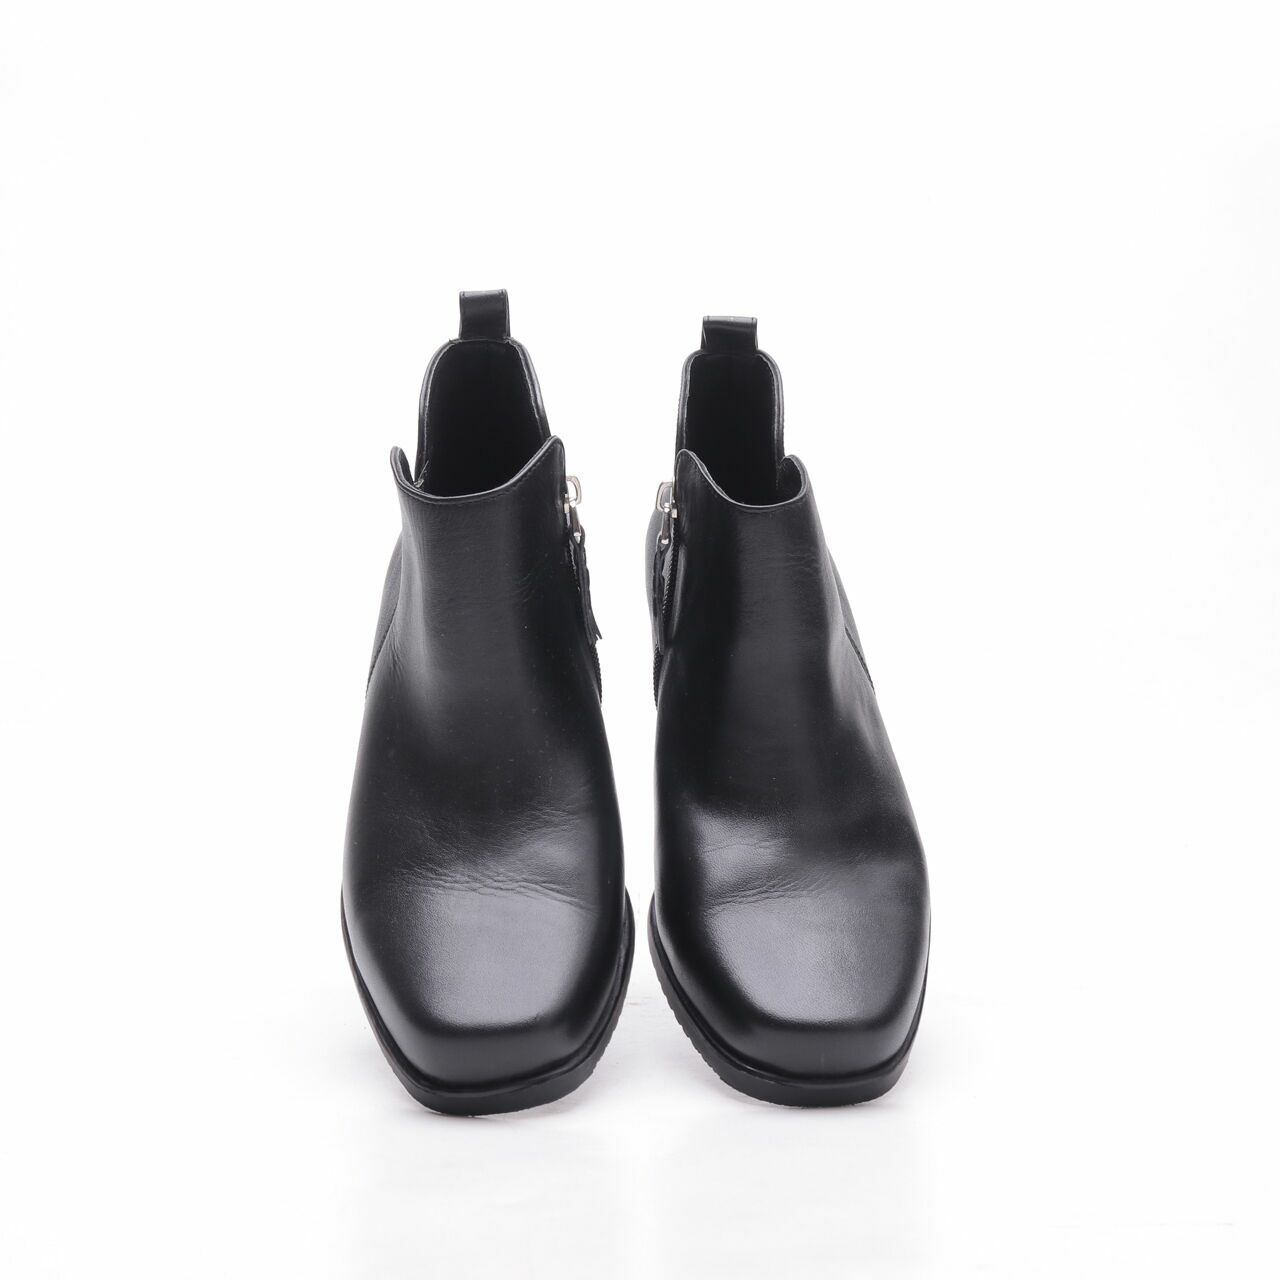 Buccheri Black Leather Boots	